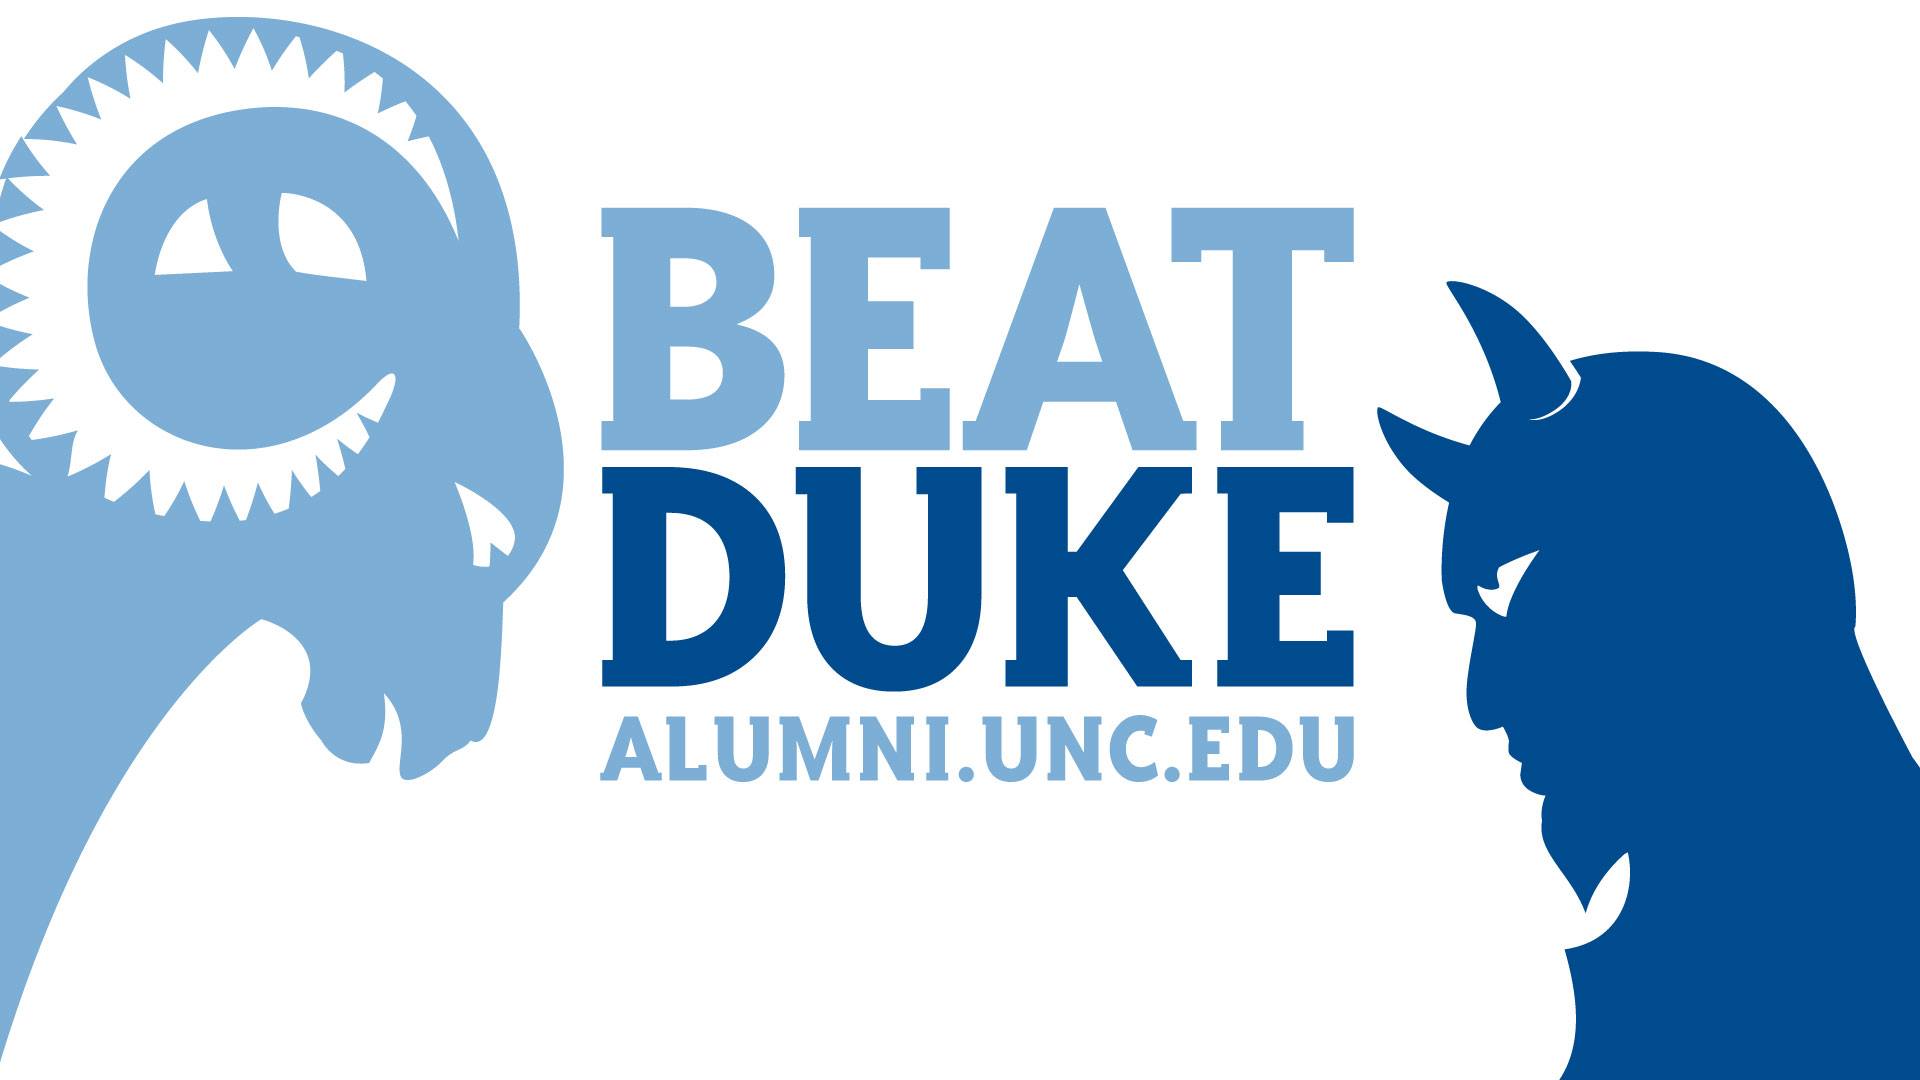 UNC vs. Duke gamewatch - March 9th @ 6 PM